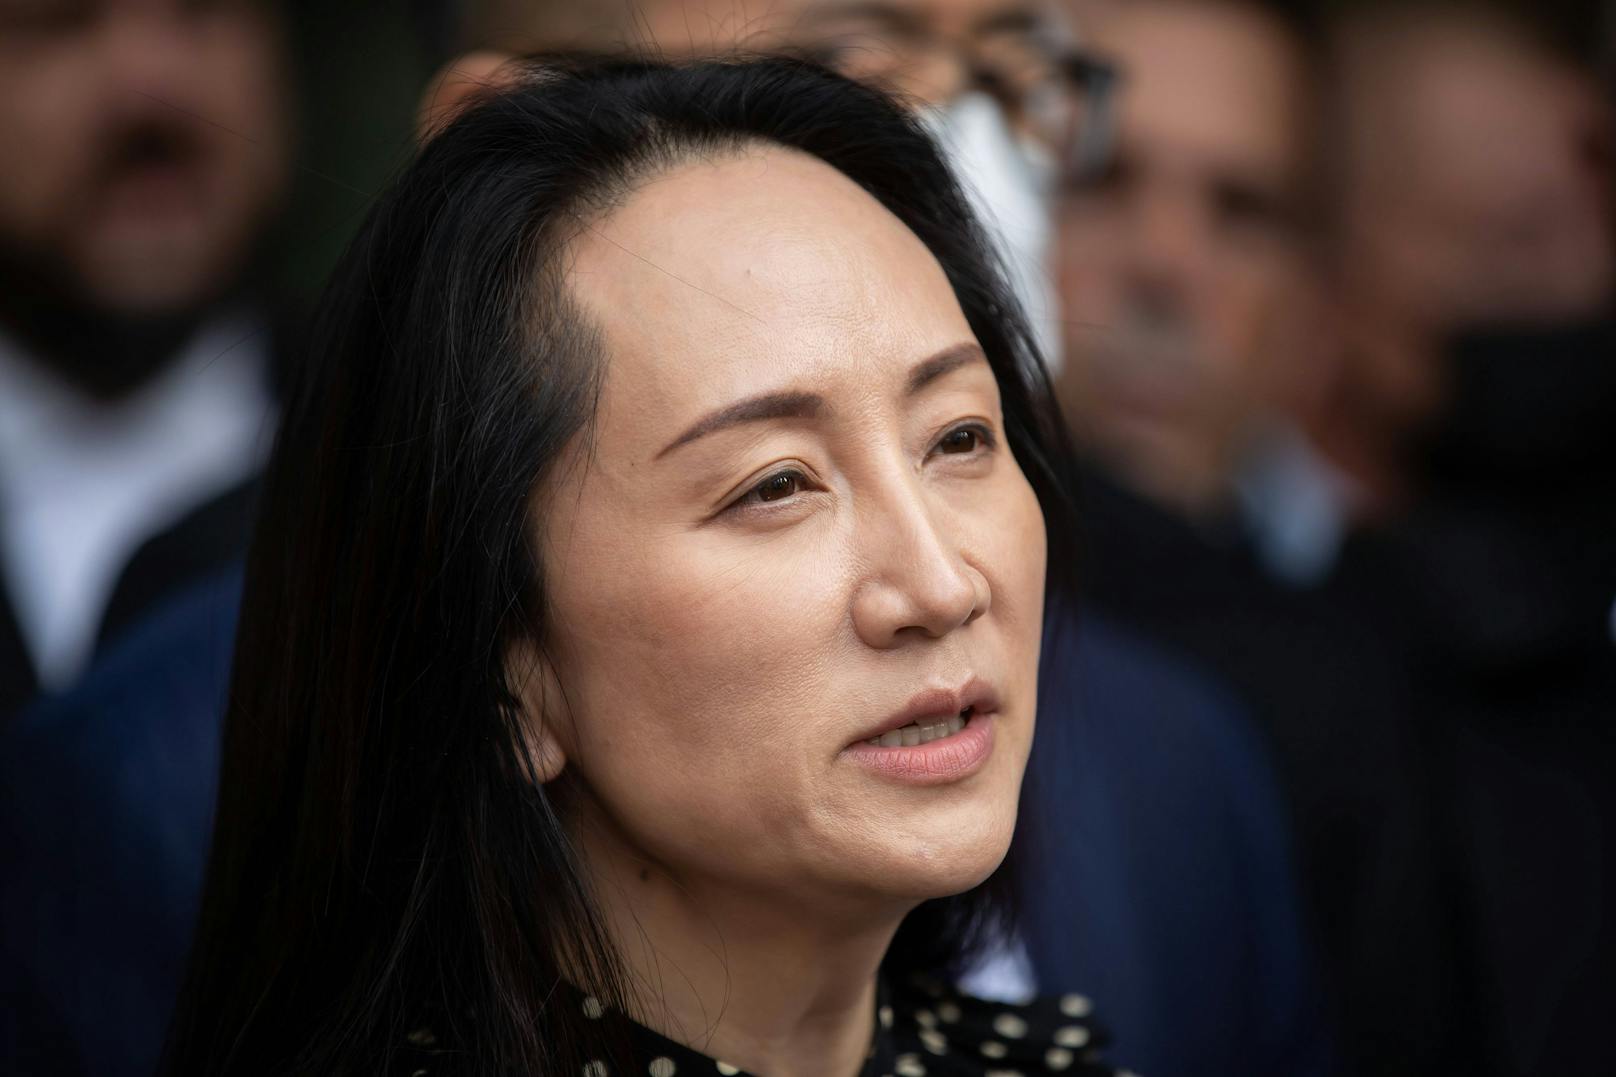 Heikle Entscheidung: Gründer-Tochter neue Huawei-Chefin